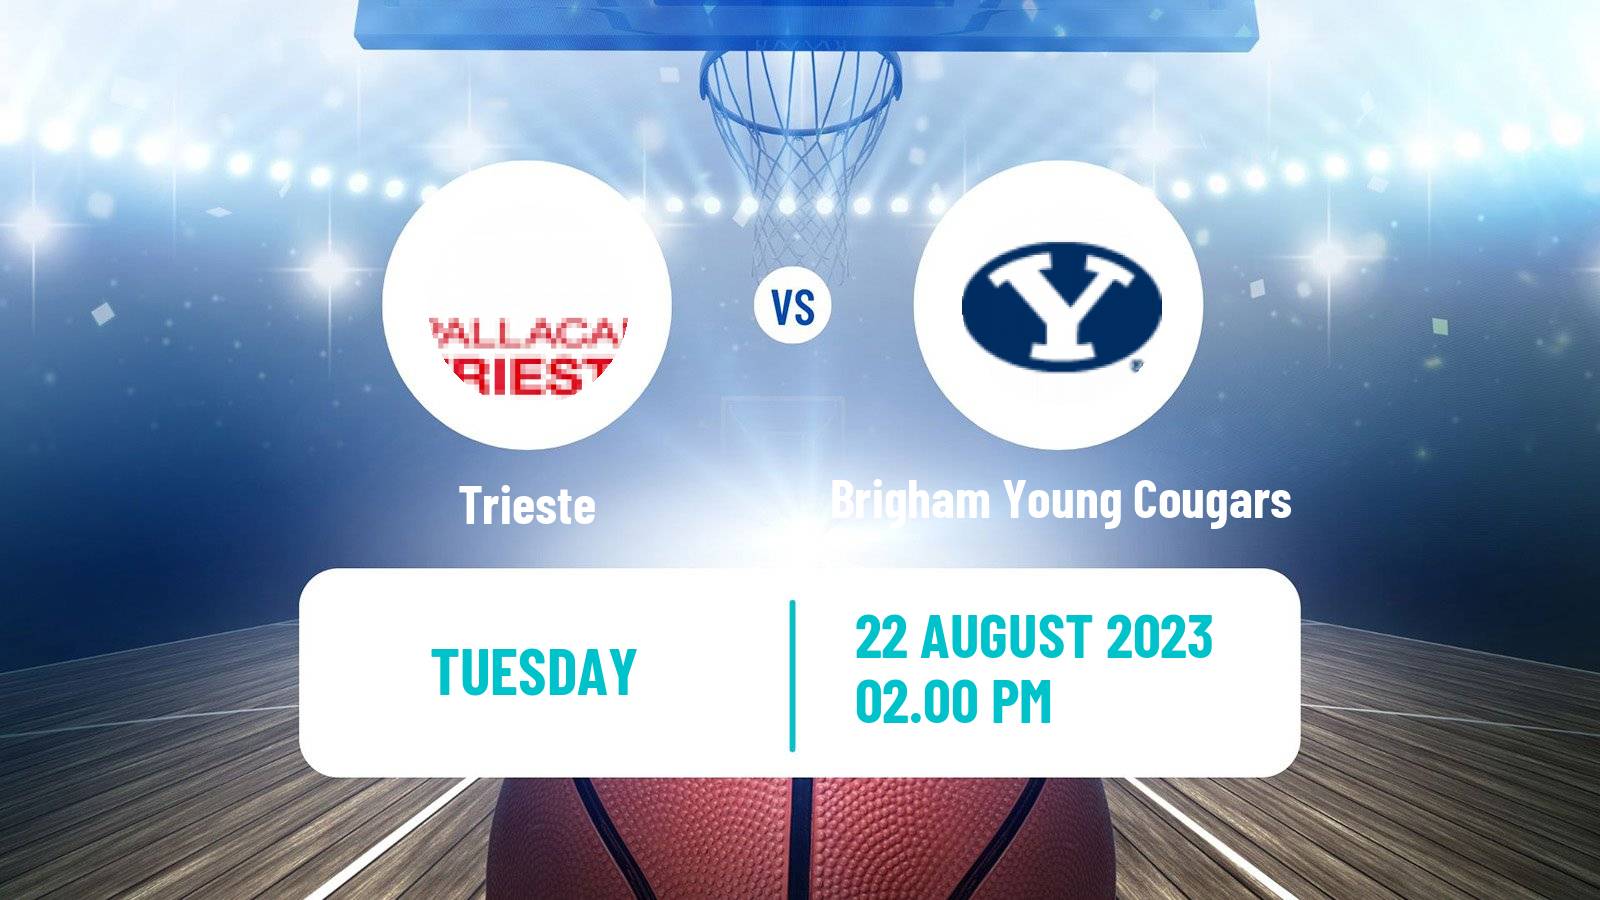 Basketball Club Friendly Basketball Trieste - Brigham Young Cougars